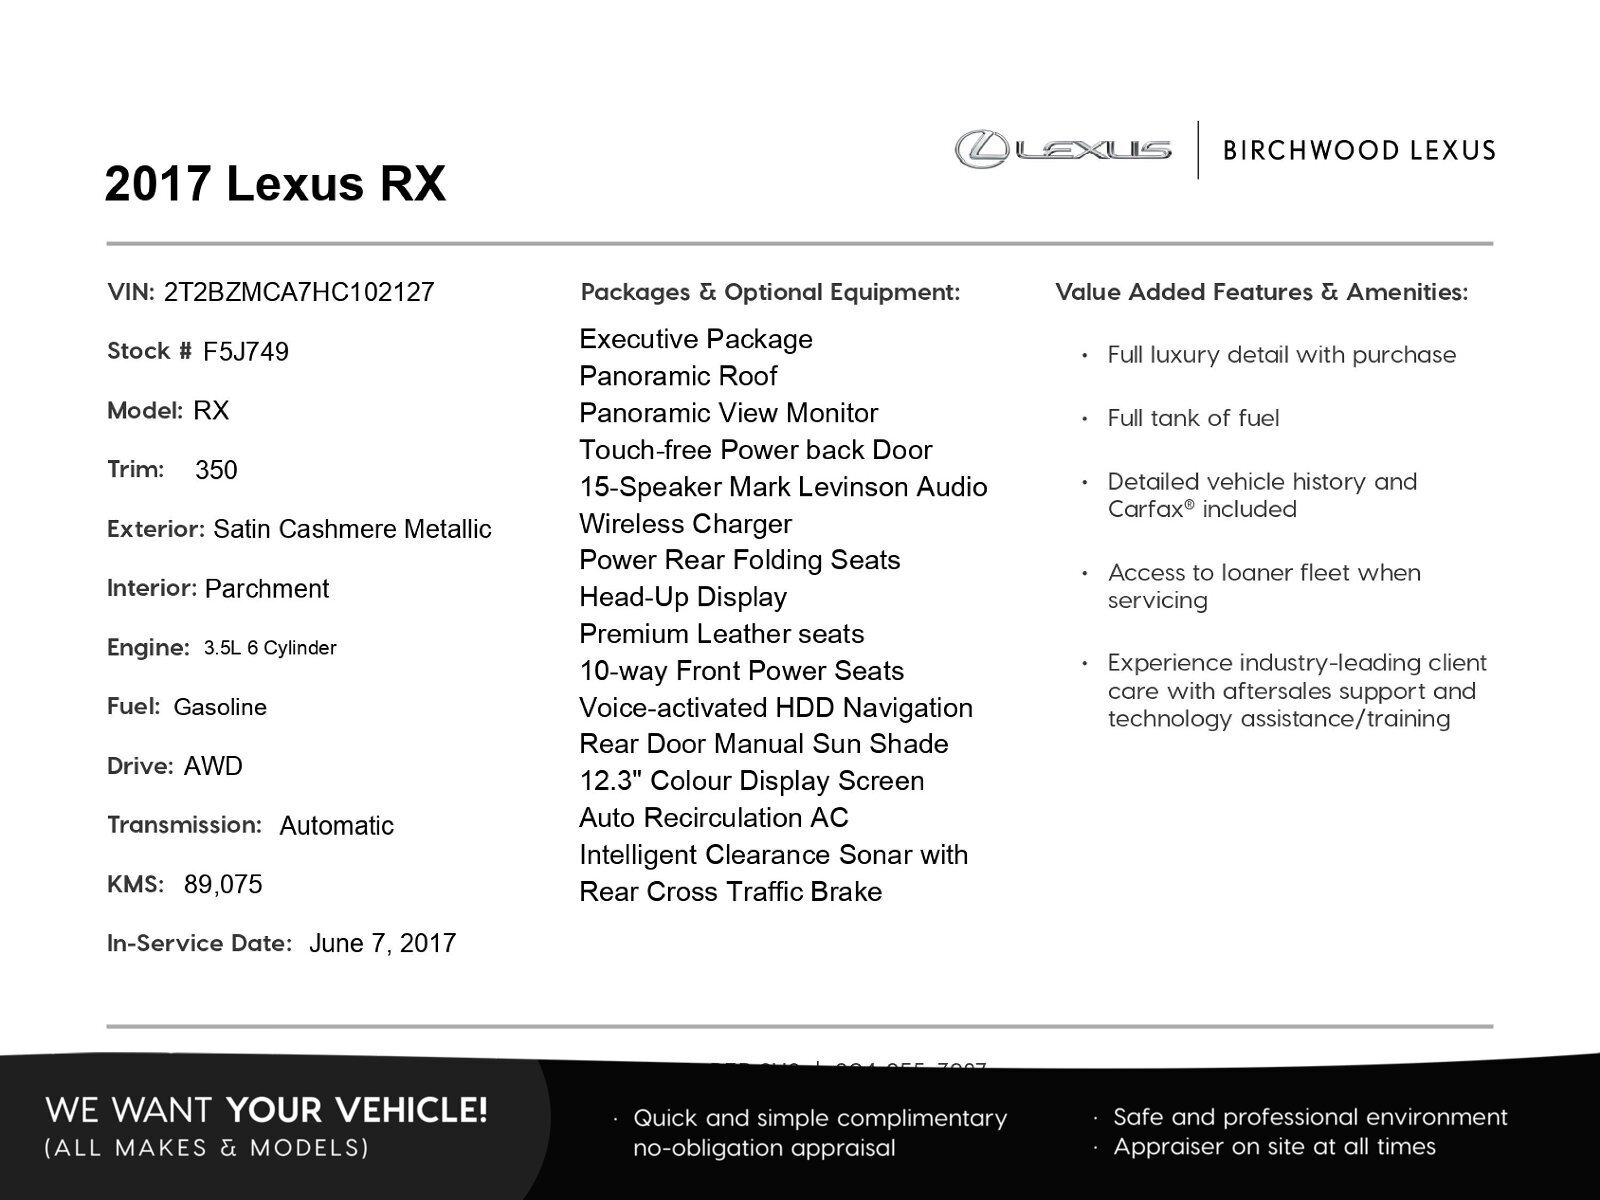 2017 Lexus RX 350 AWD 4dr Executive | AWD | Low KM's